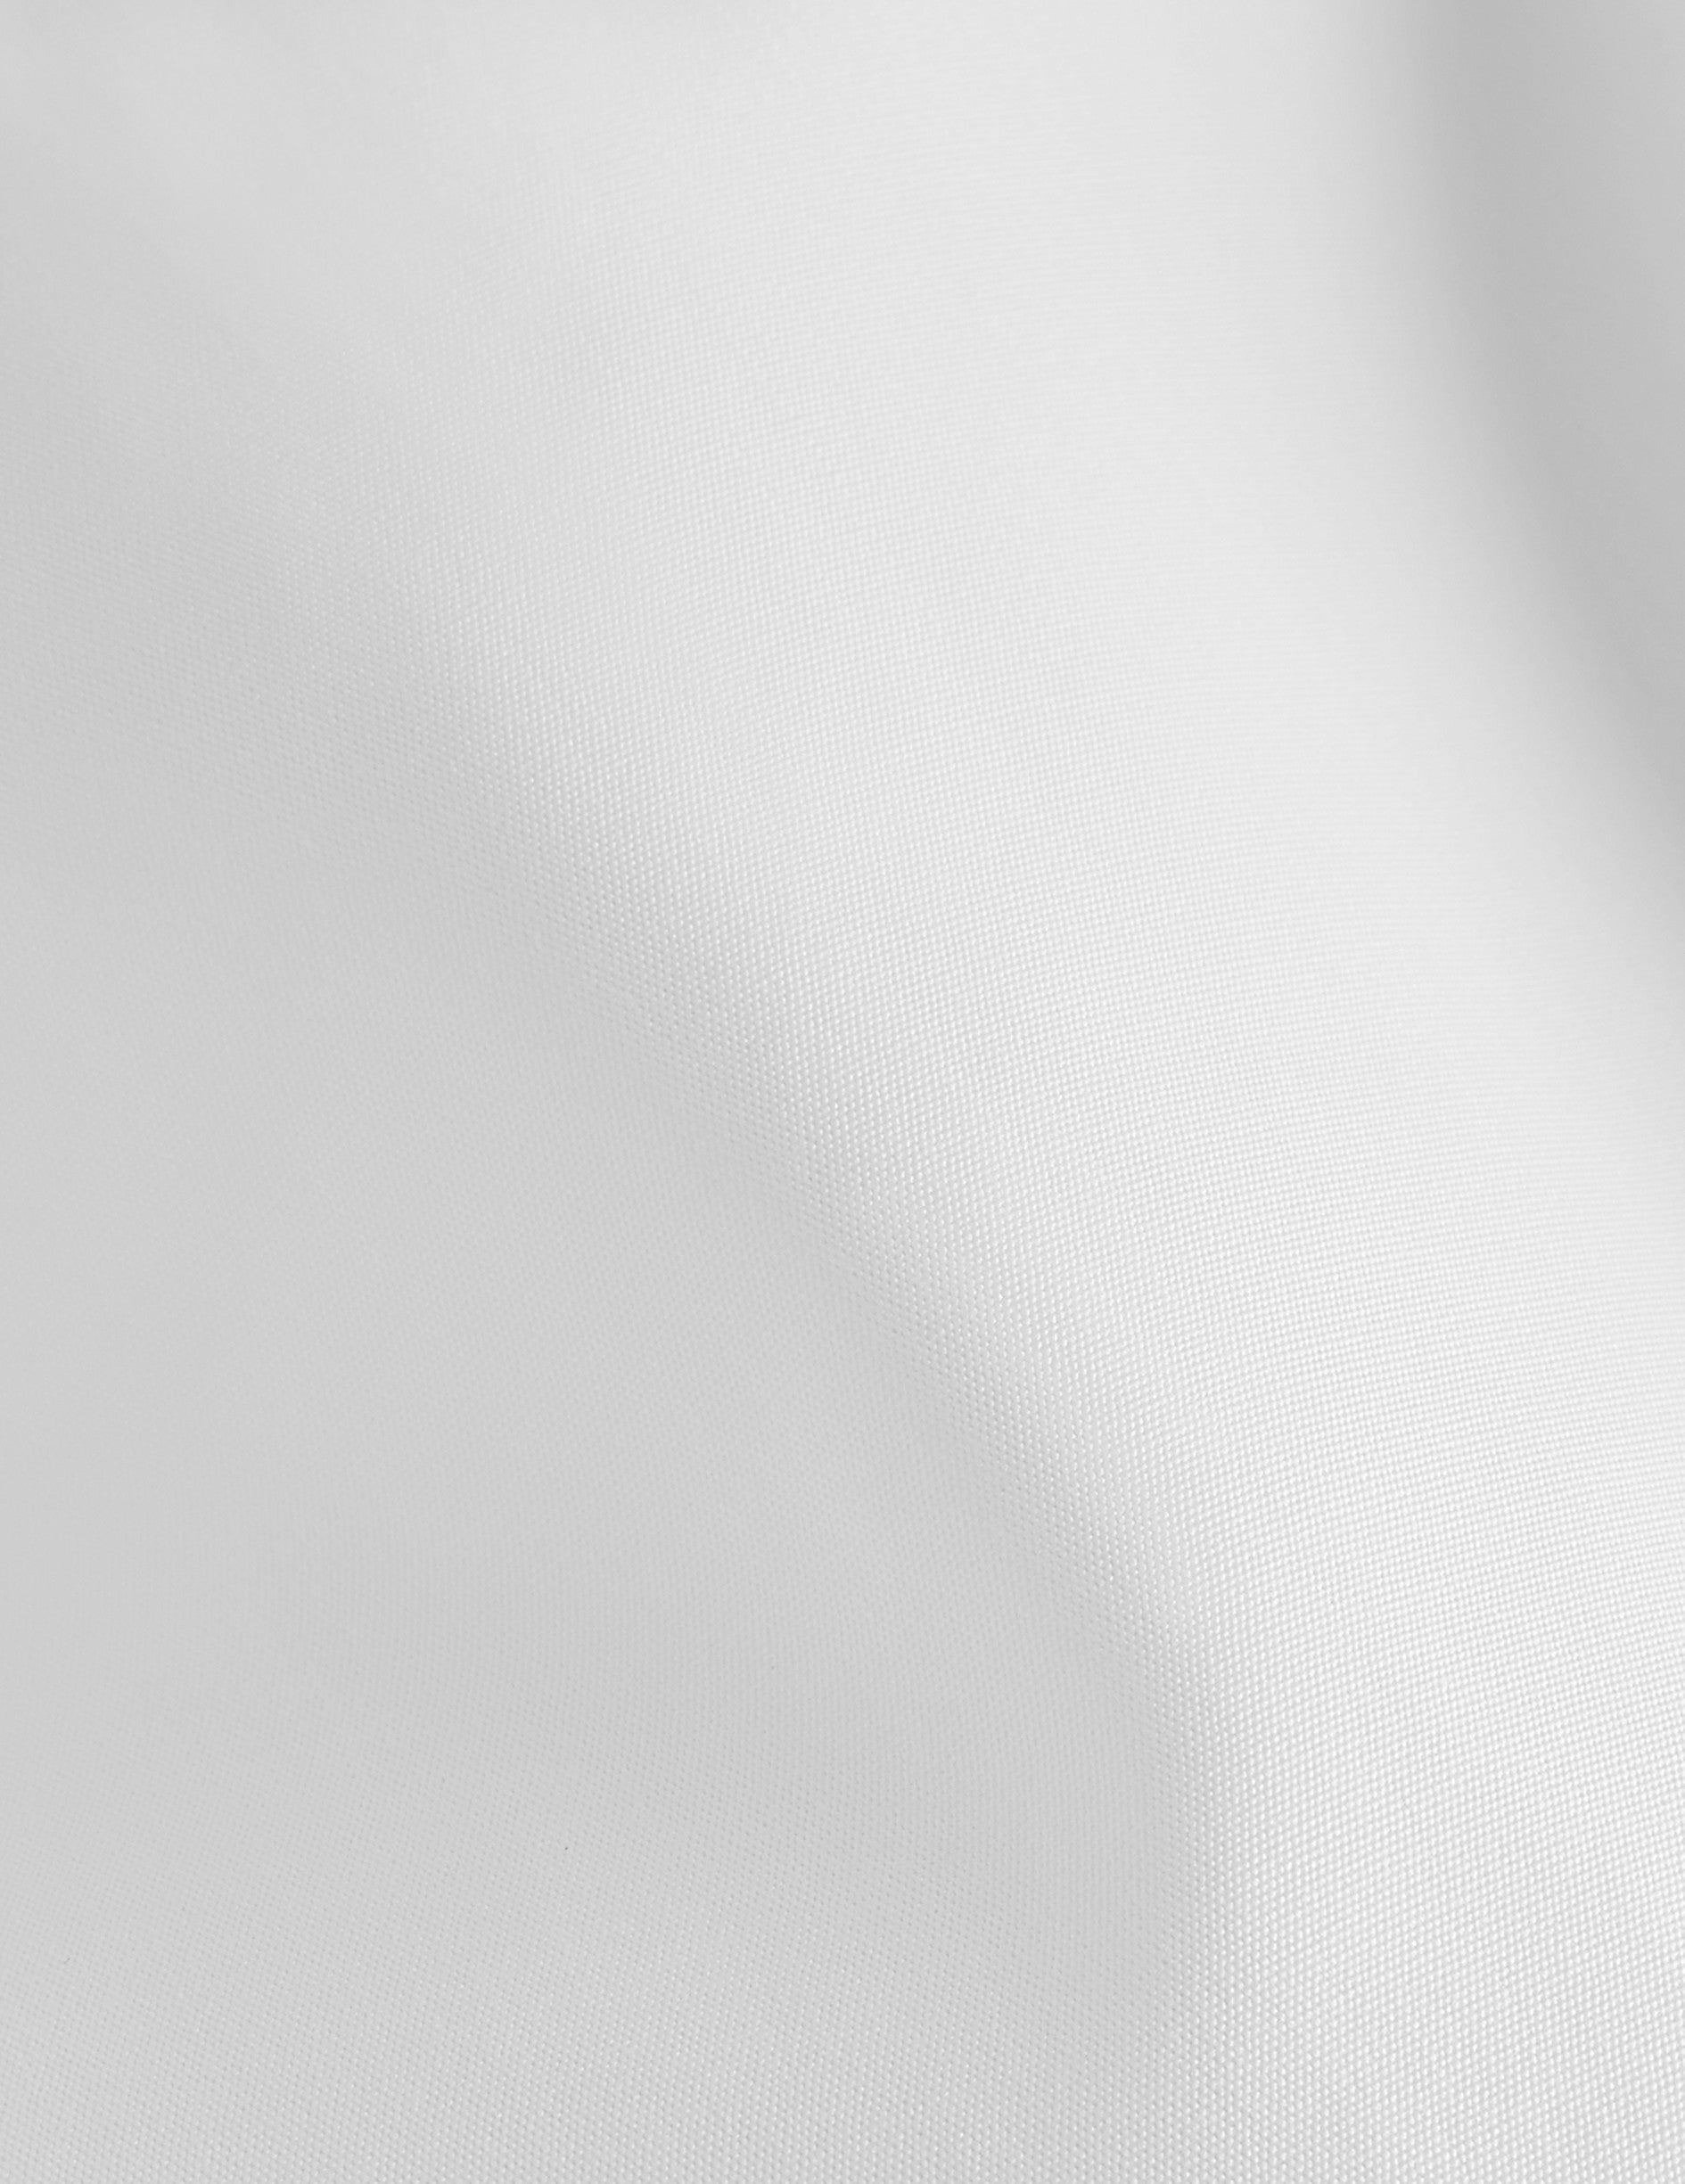 Chemise mixte "Je t'aime" blanche brodée gris - Popeline - Col Figaret